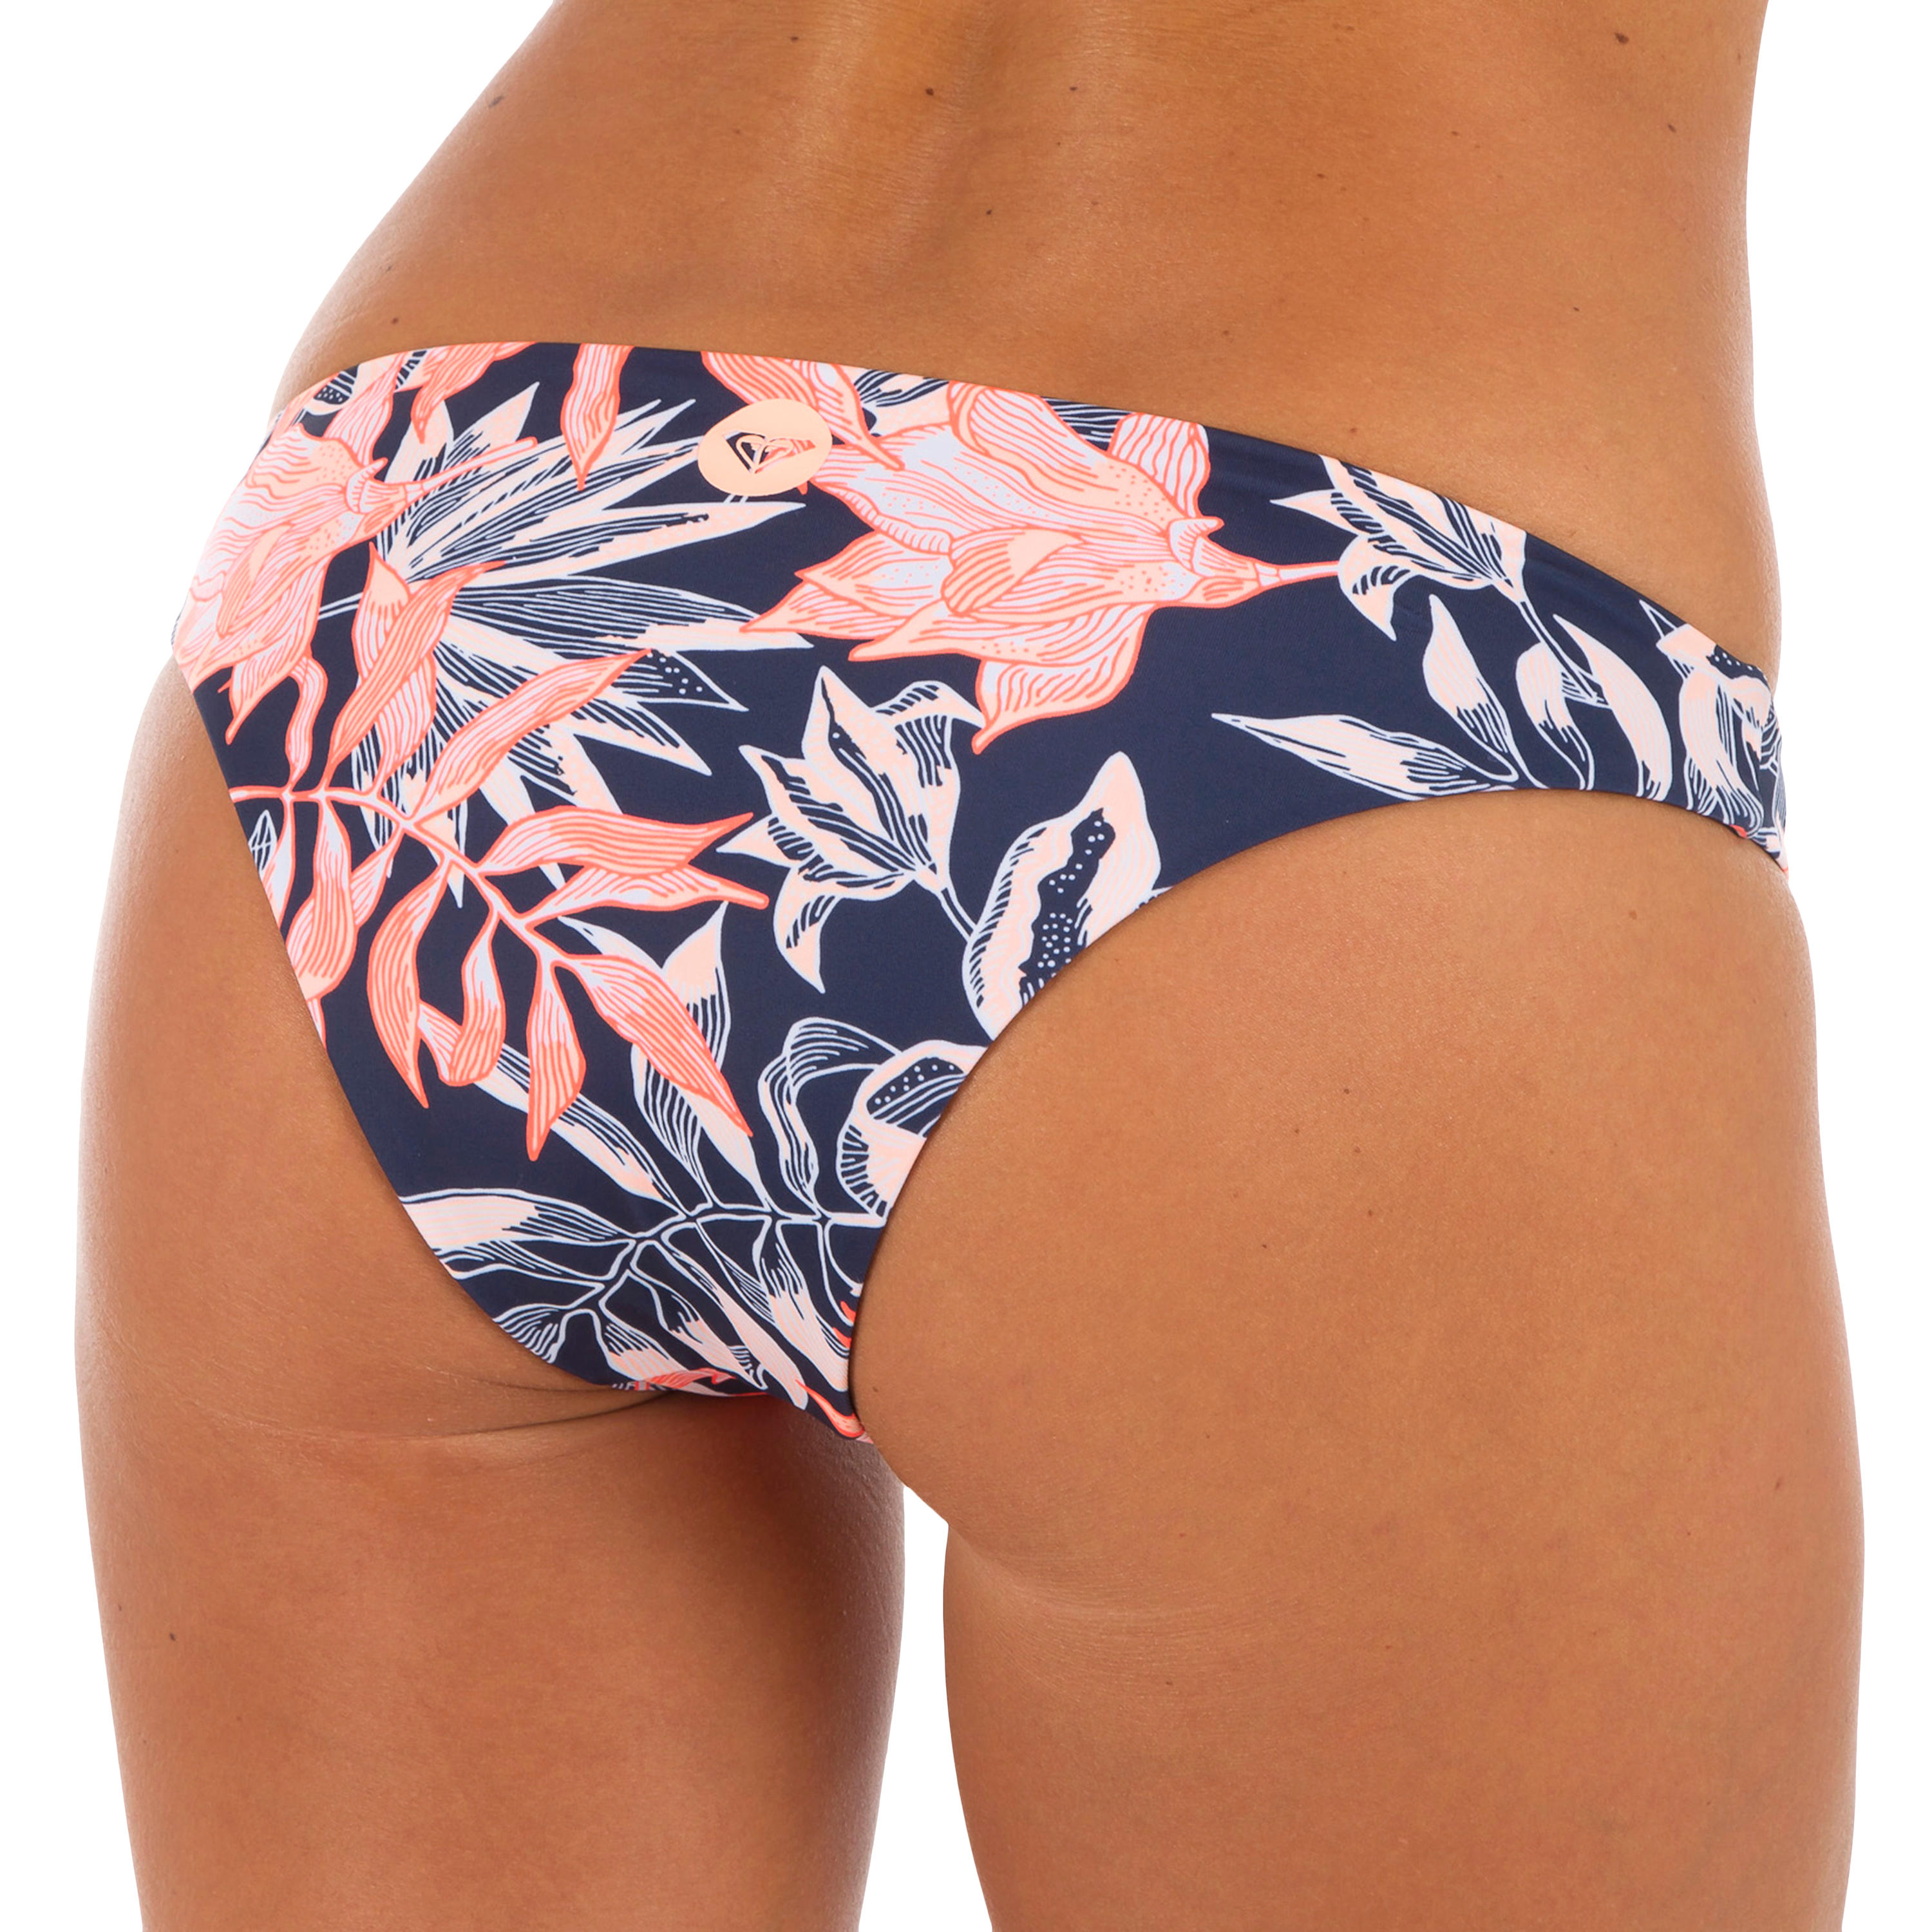 Women's briefs swimsuit bottoms VIVIAN Roxy 3/7